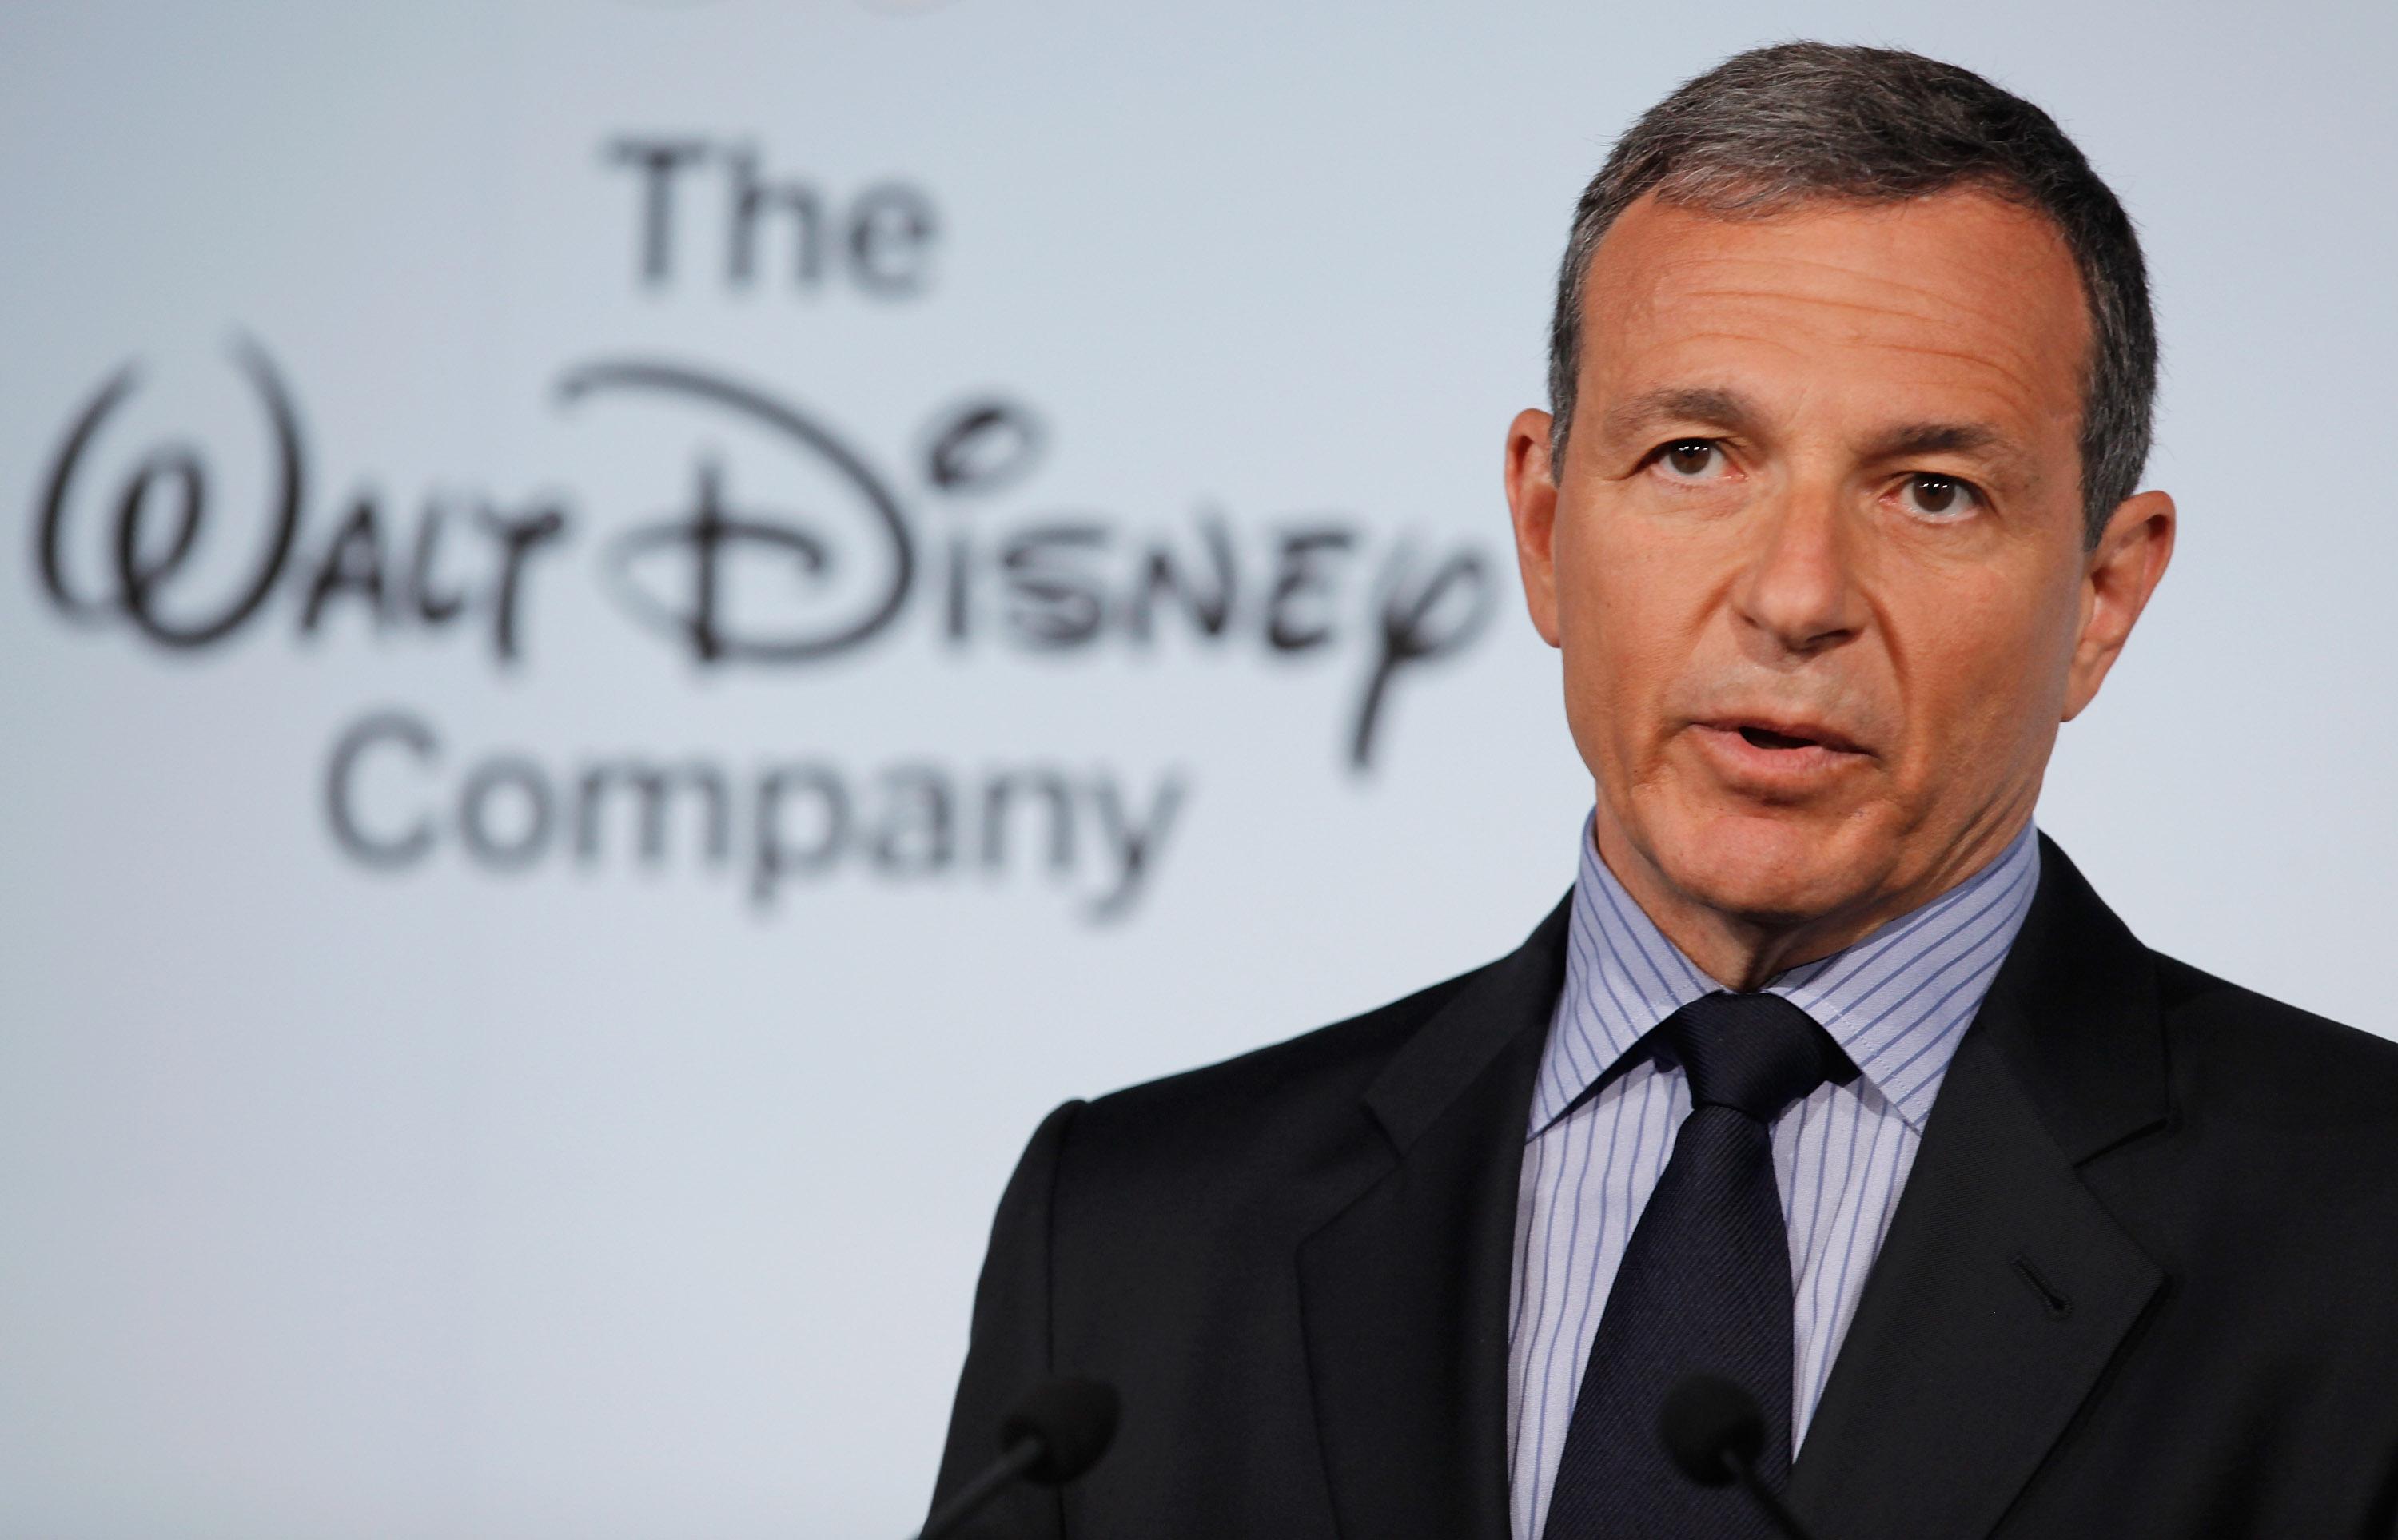 The Walt Disney Company Chairman and CEO Robert Iger 